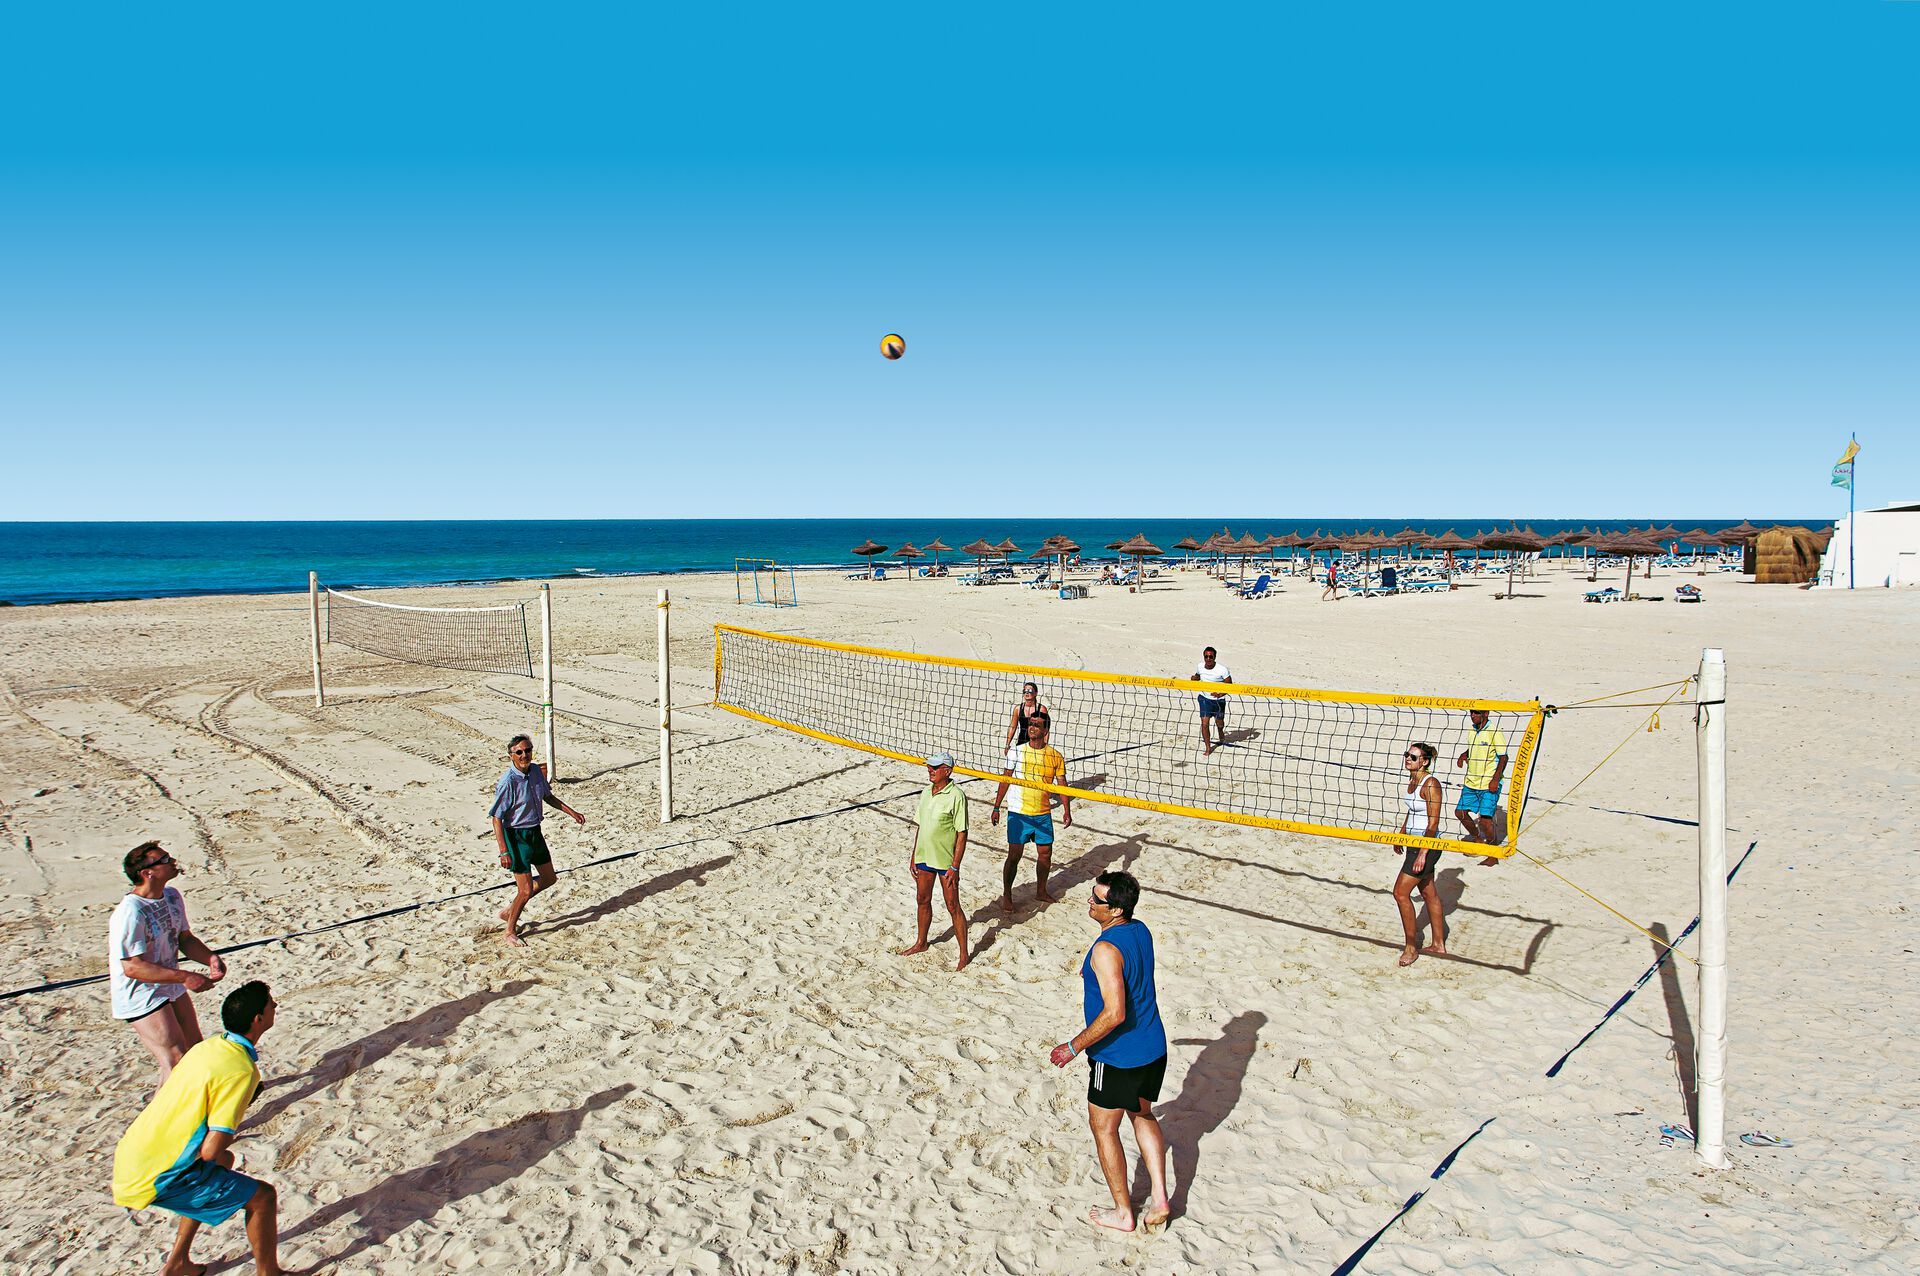 Tunisie - Djerba - Club Calimera Yati Beach 4*